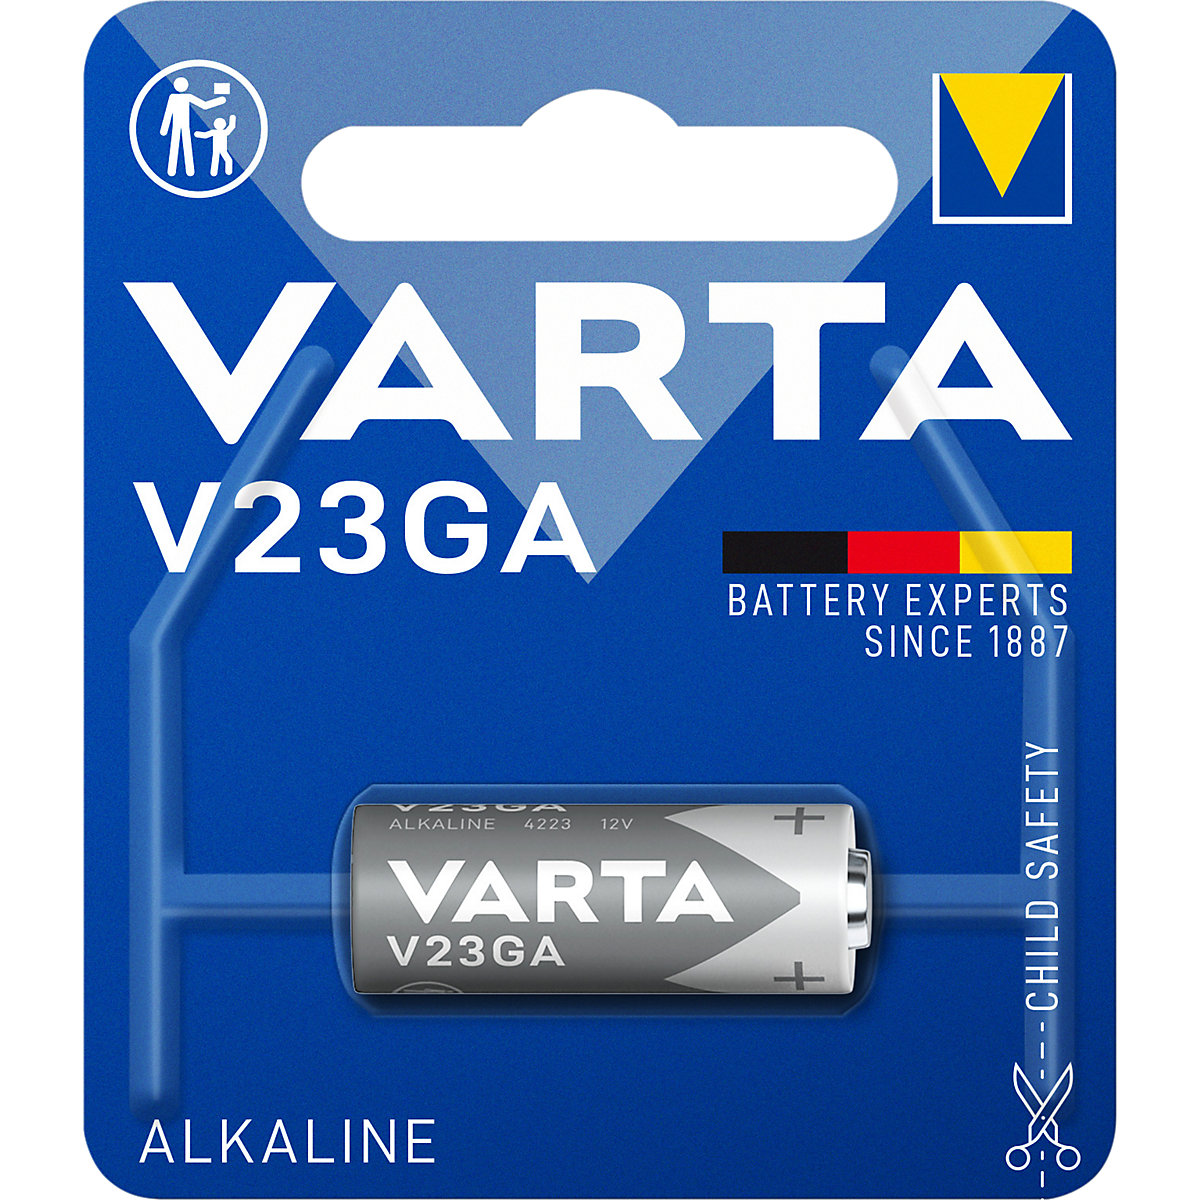 Batteria speciale ALKALINE – VARTA